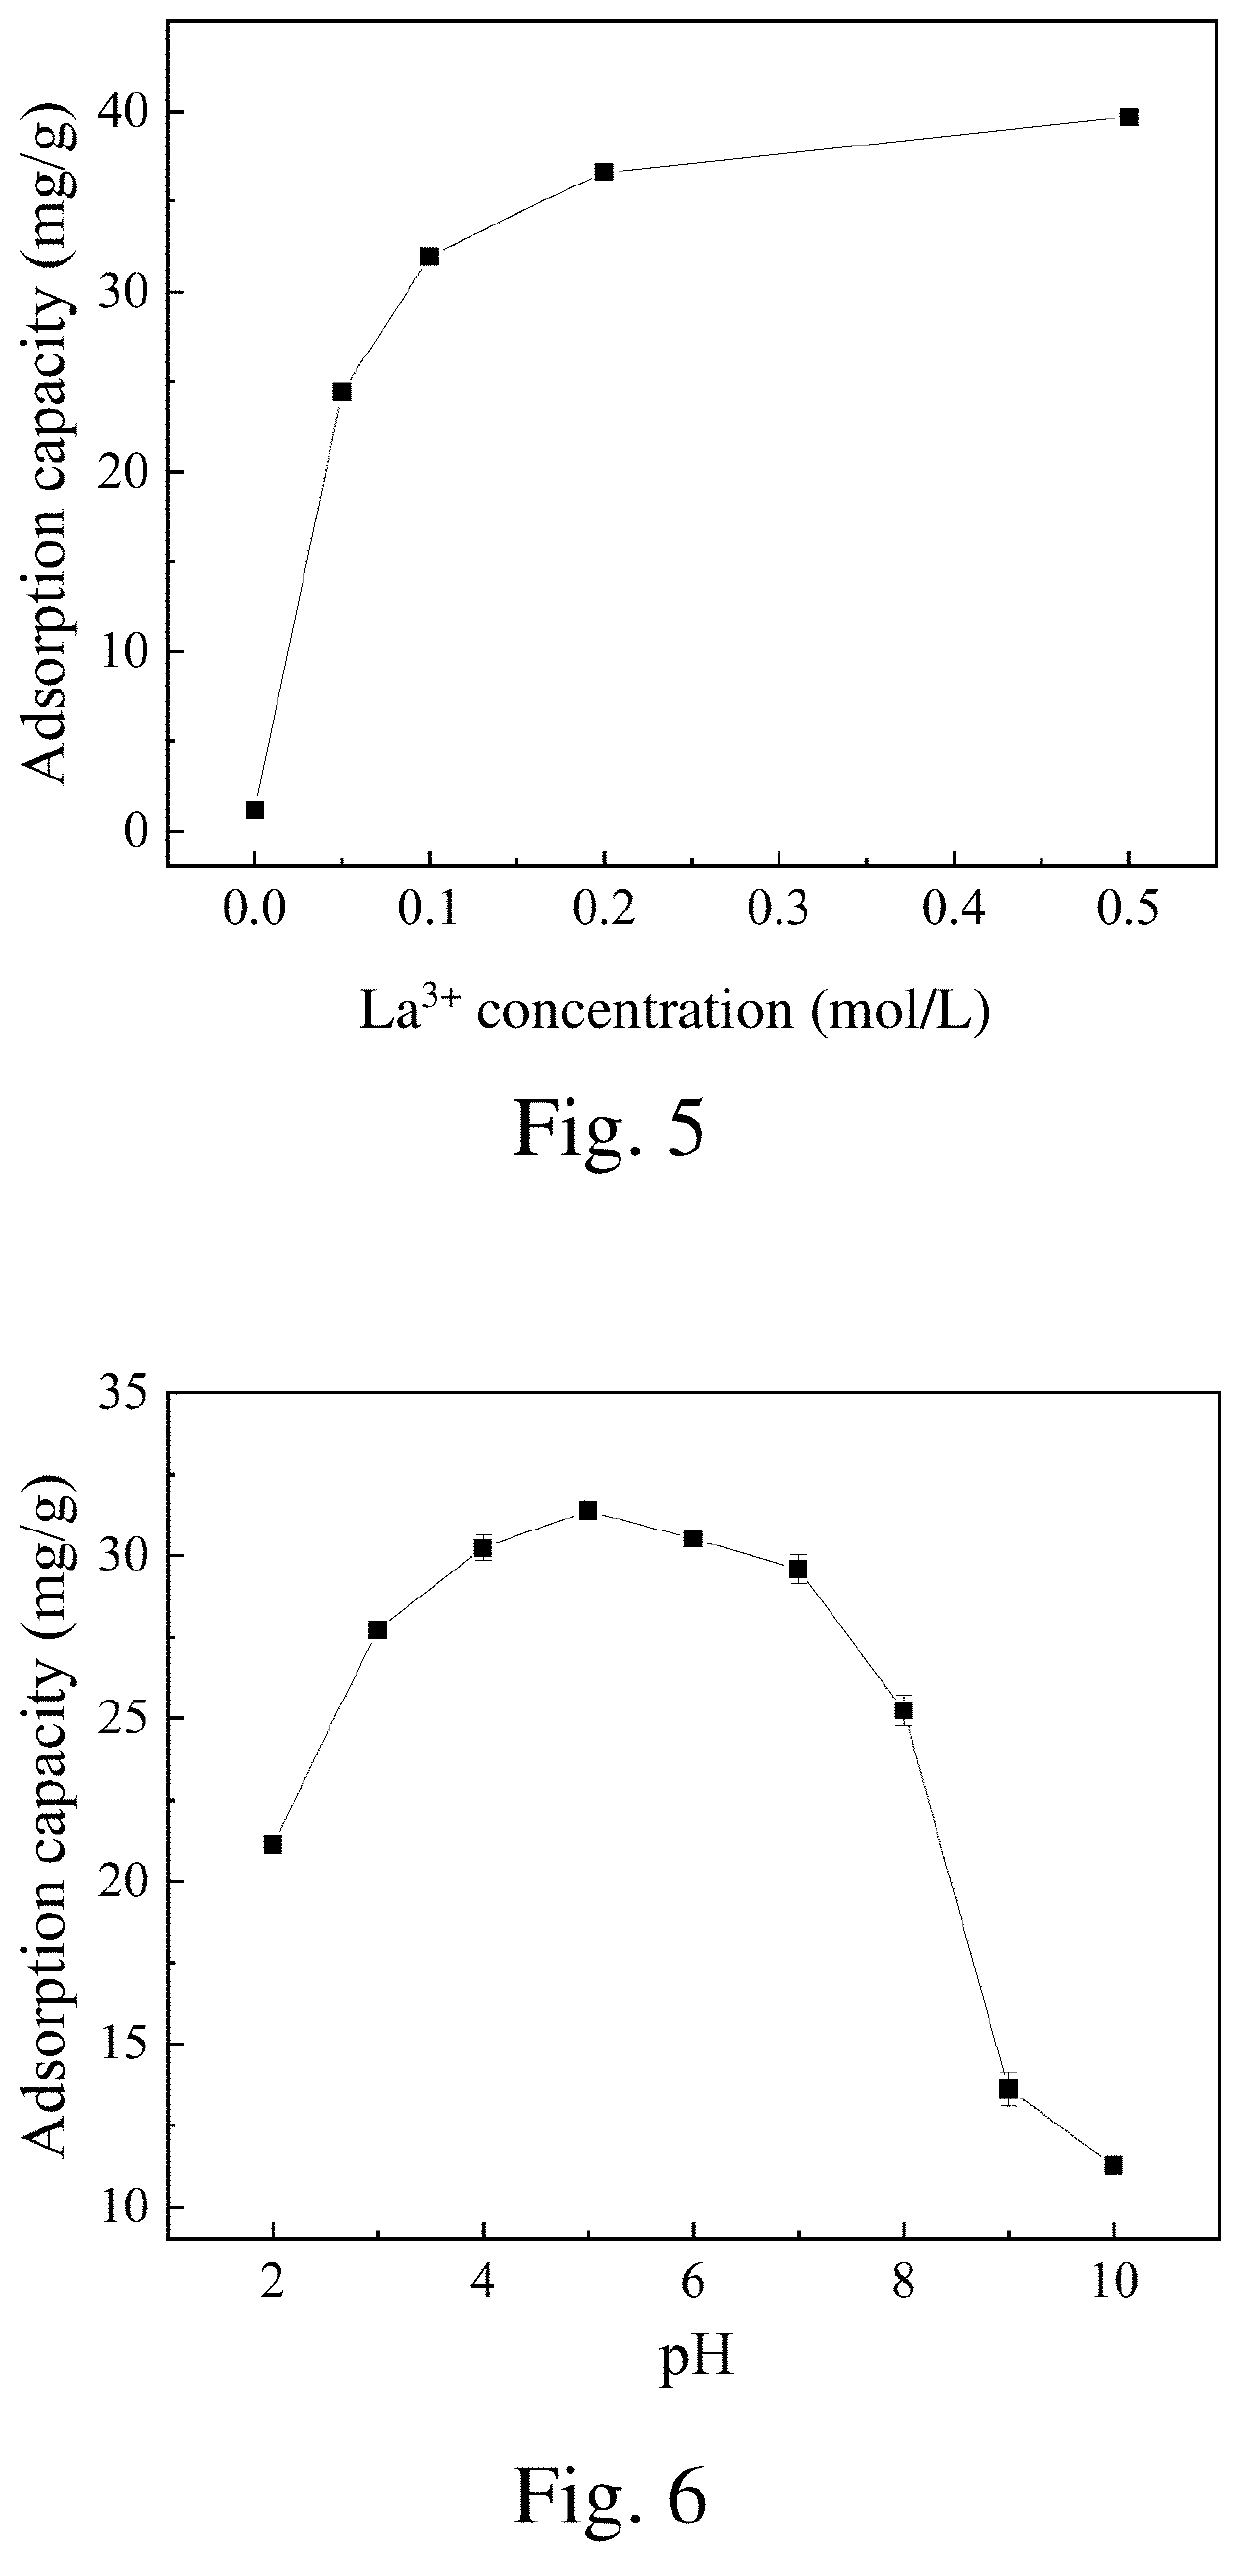 Co-pyrolyzed sludge biochar modified by lanthanum carbonate, preparation method and use thereof